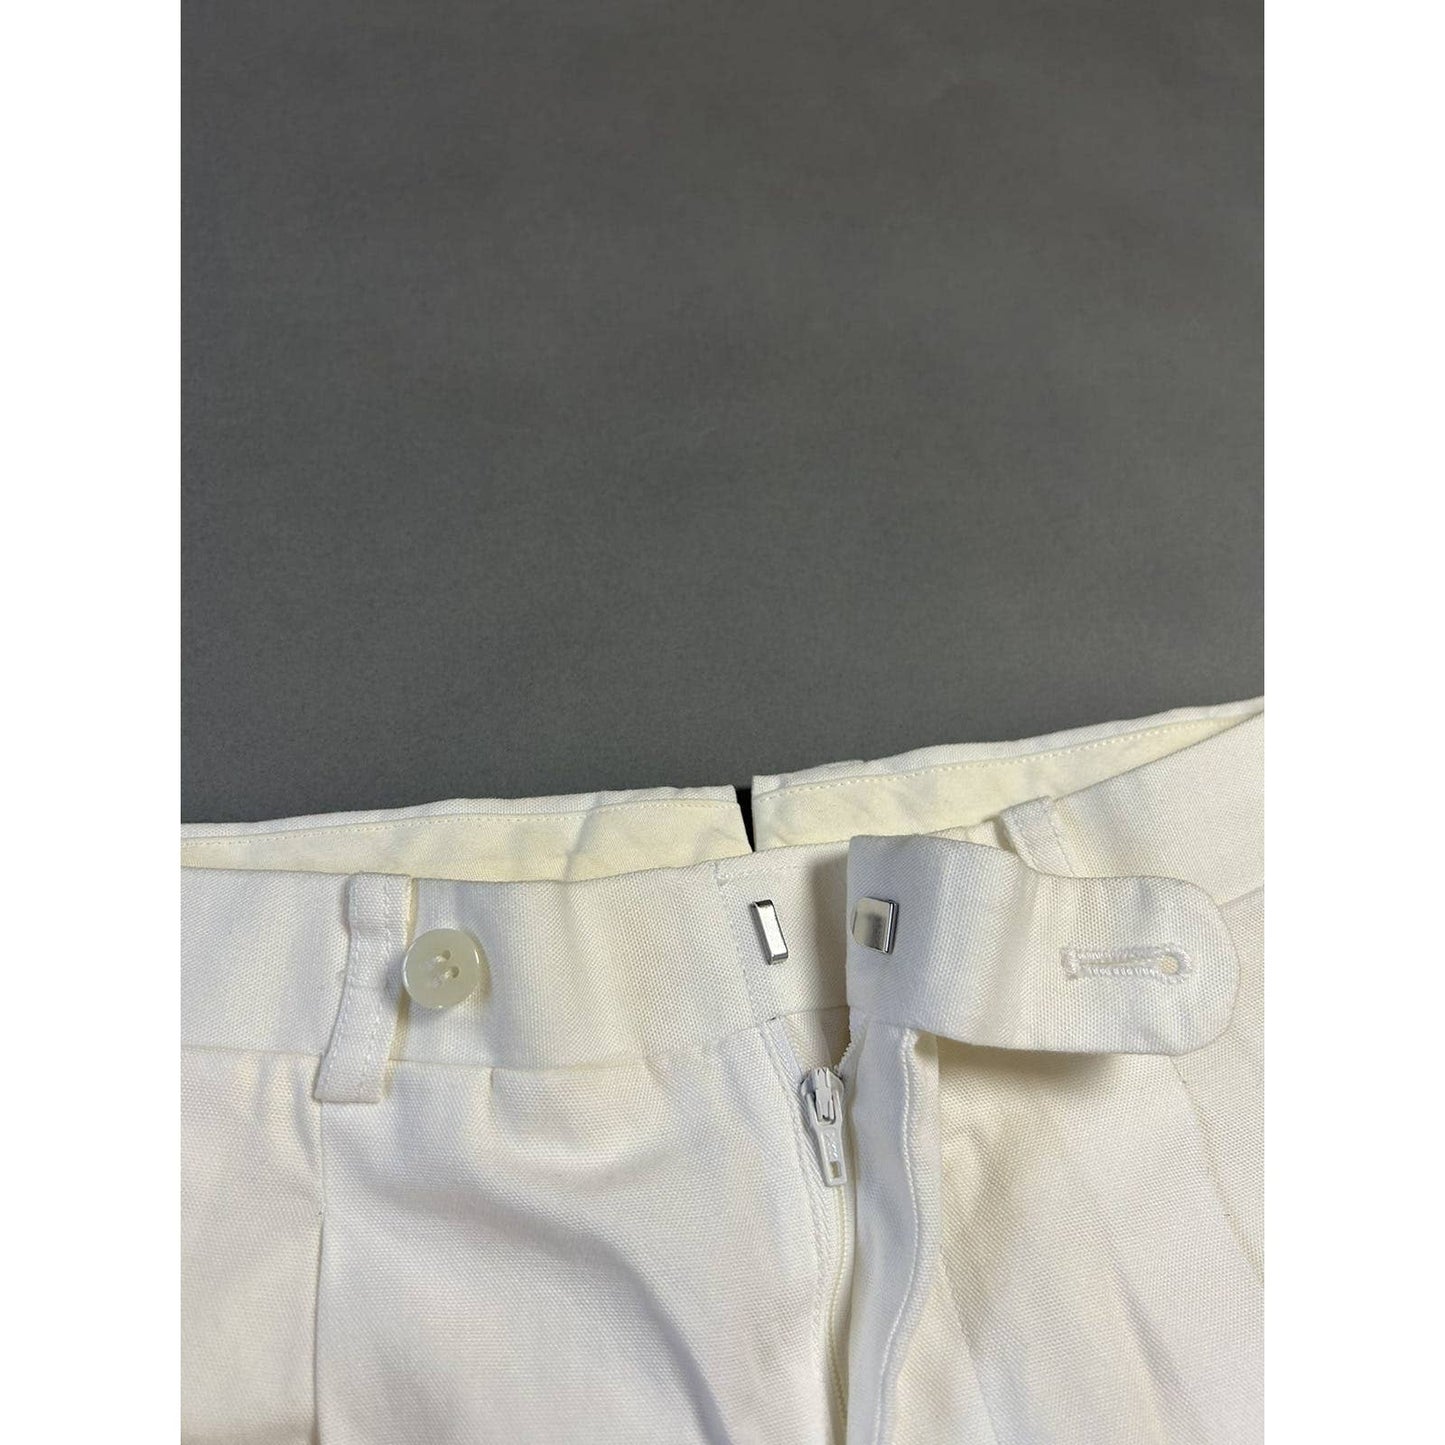 Evisu Fairway Genes vintage white chino pants dots logo